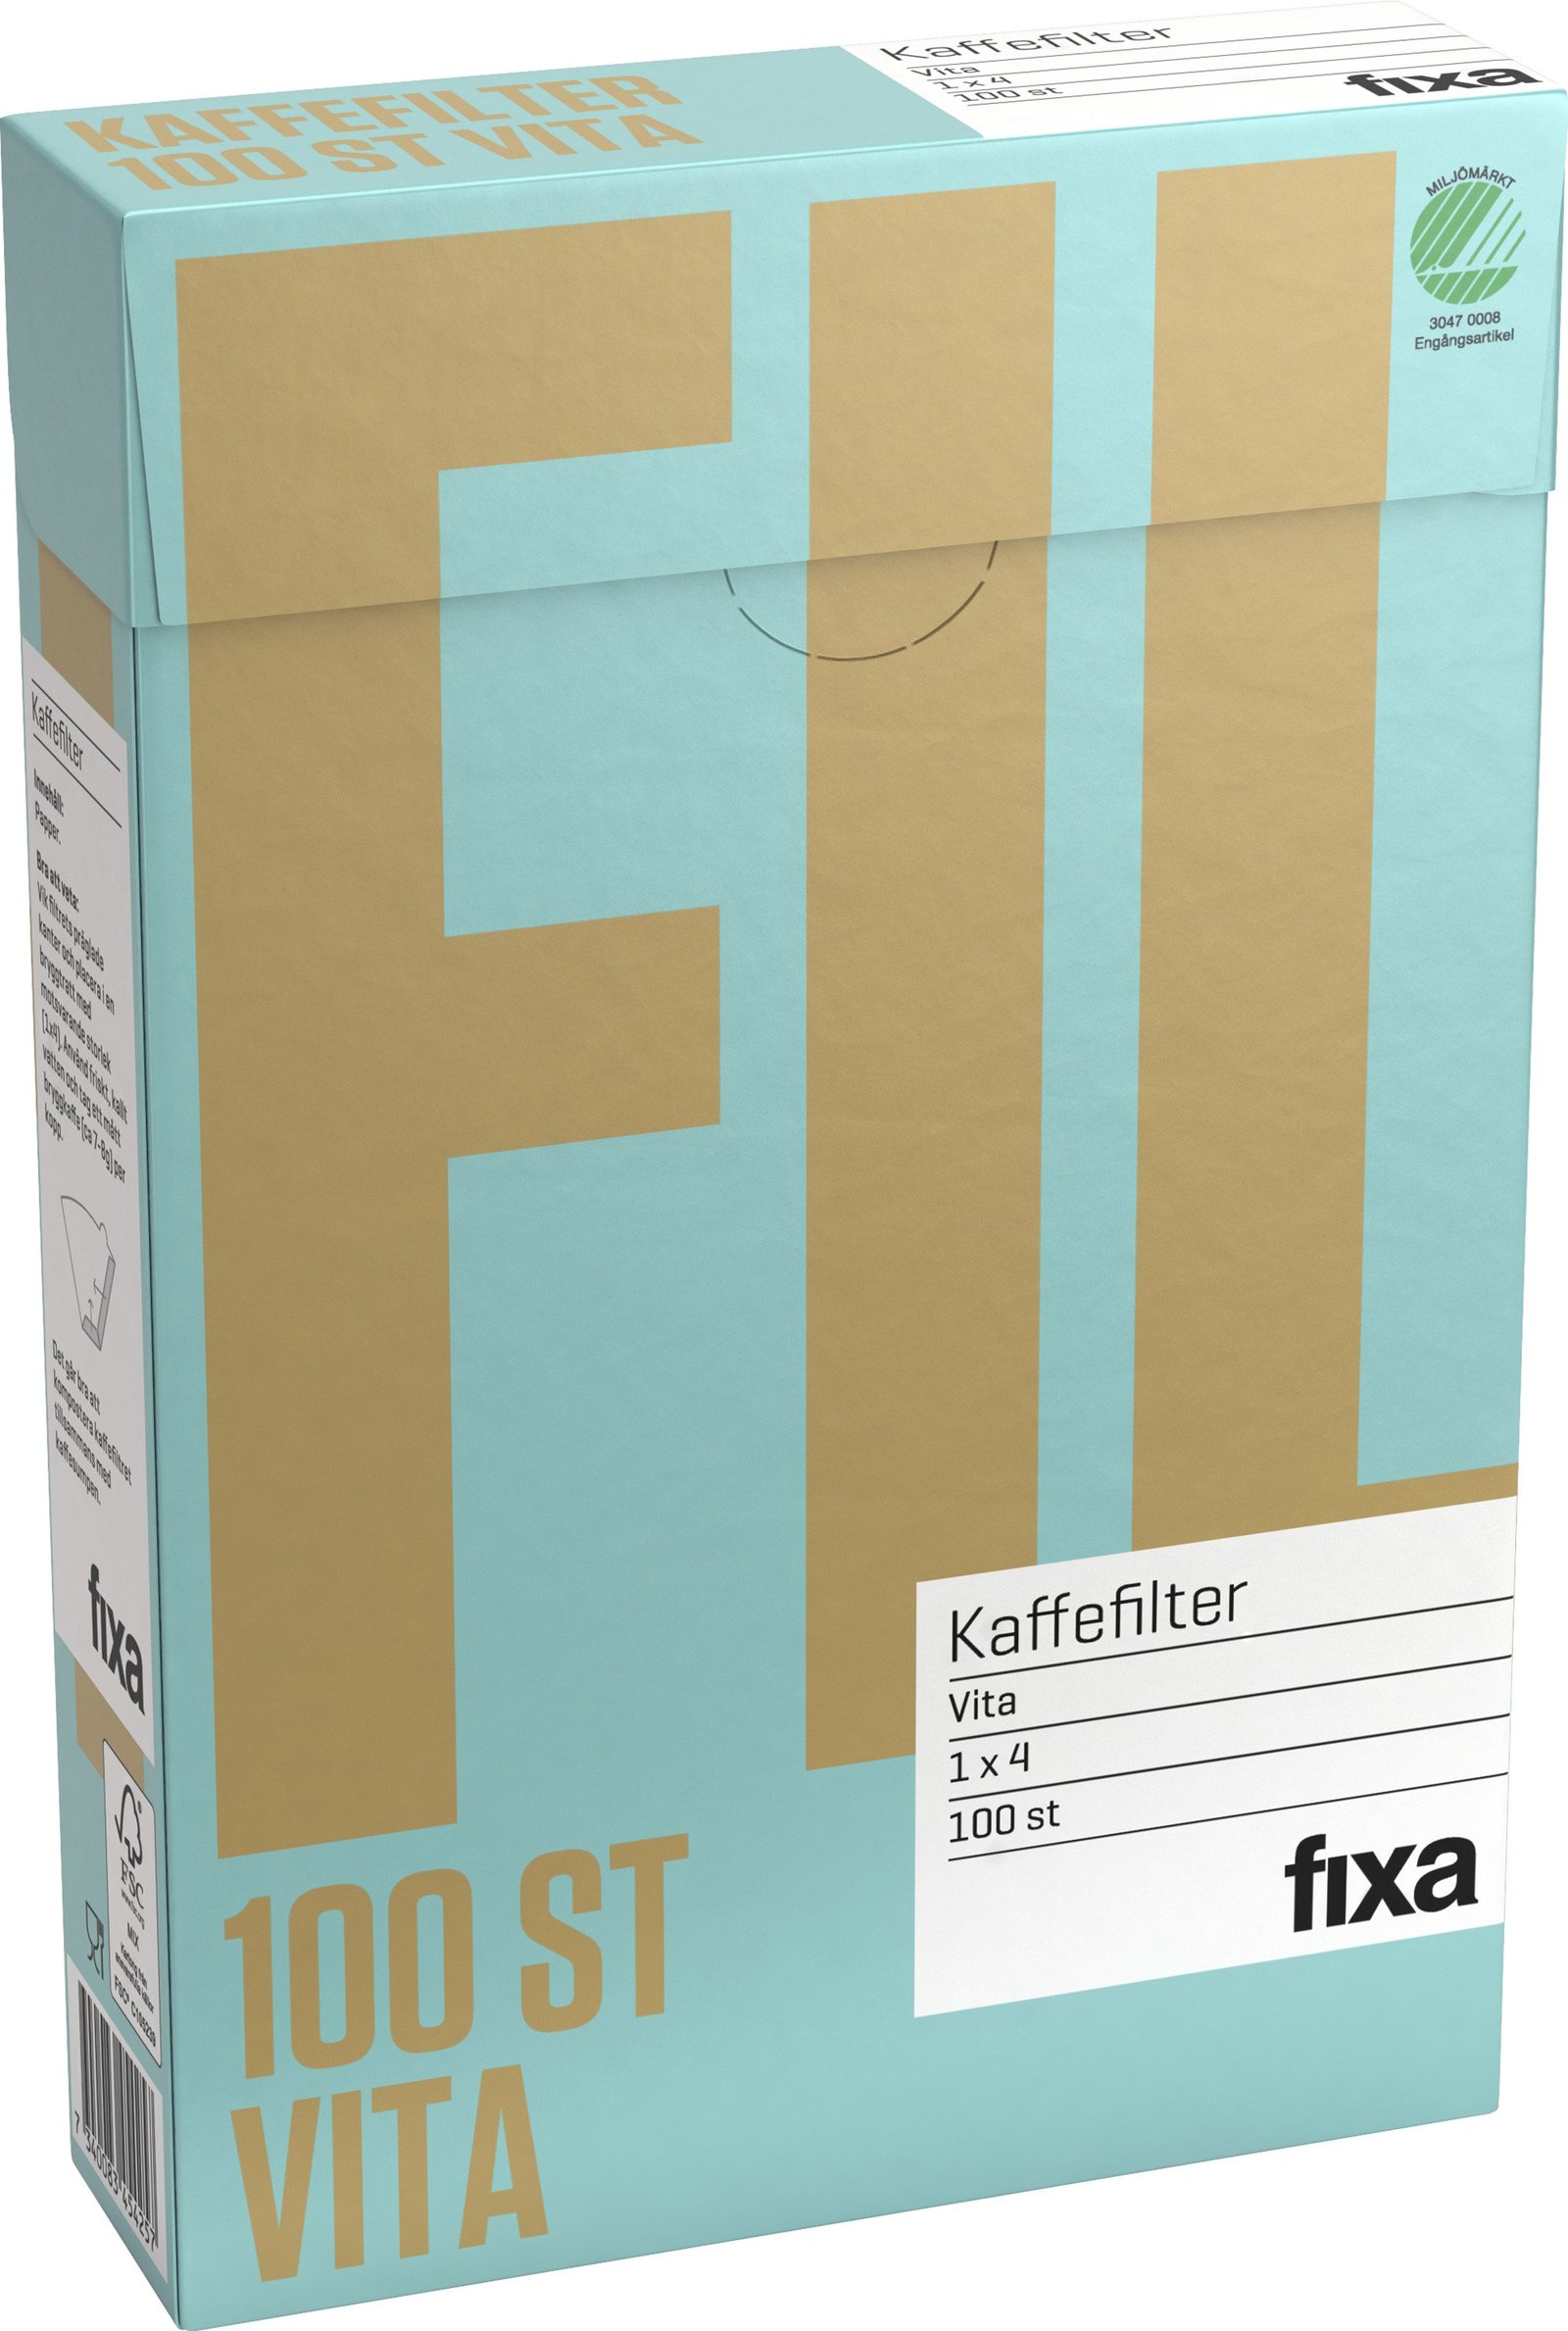 Fixa Kaffefilter 1x4 - 100 st